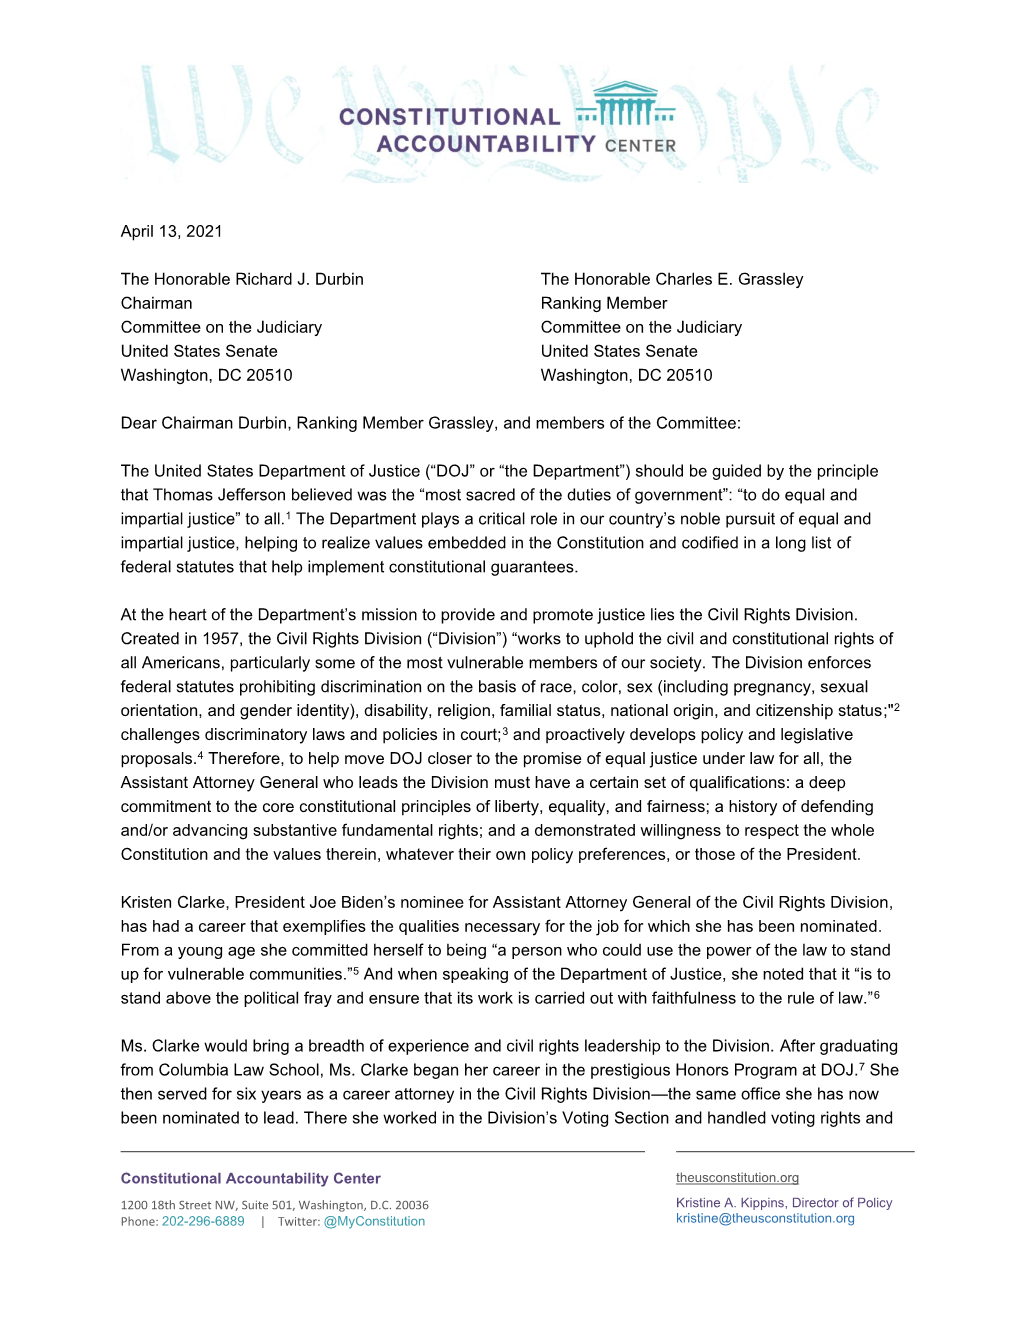 Constitutional Accountability Center Letter of Support for Kristen Clarke